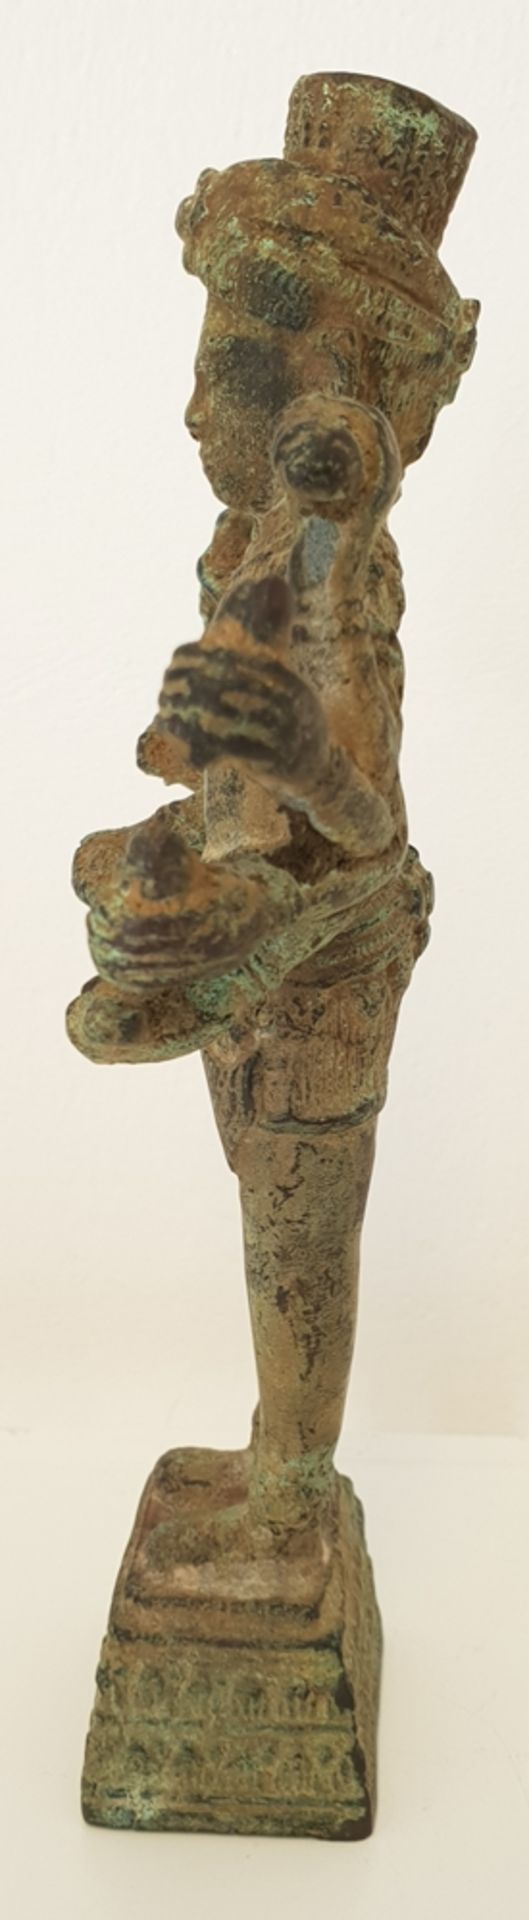 8 armige Shiva Skulptur, Bronze, Asien, Höhe ca. 18cm, Gewicht ca. 439 GrammShiva - Image 3 of 4